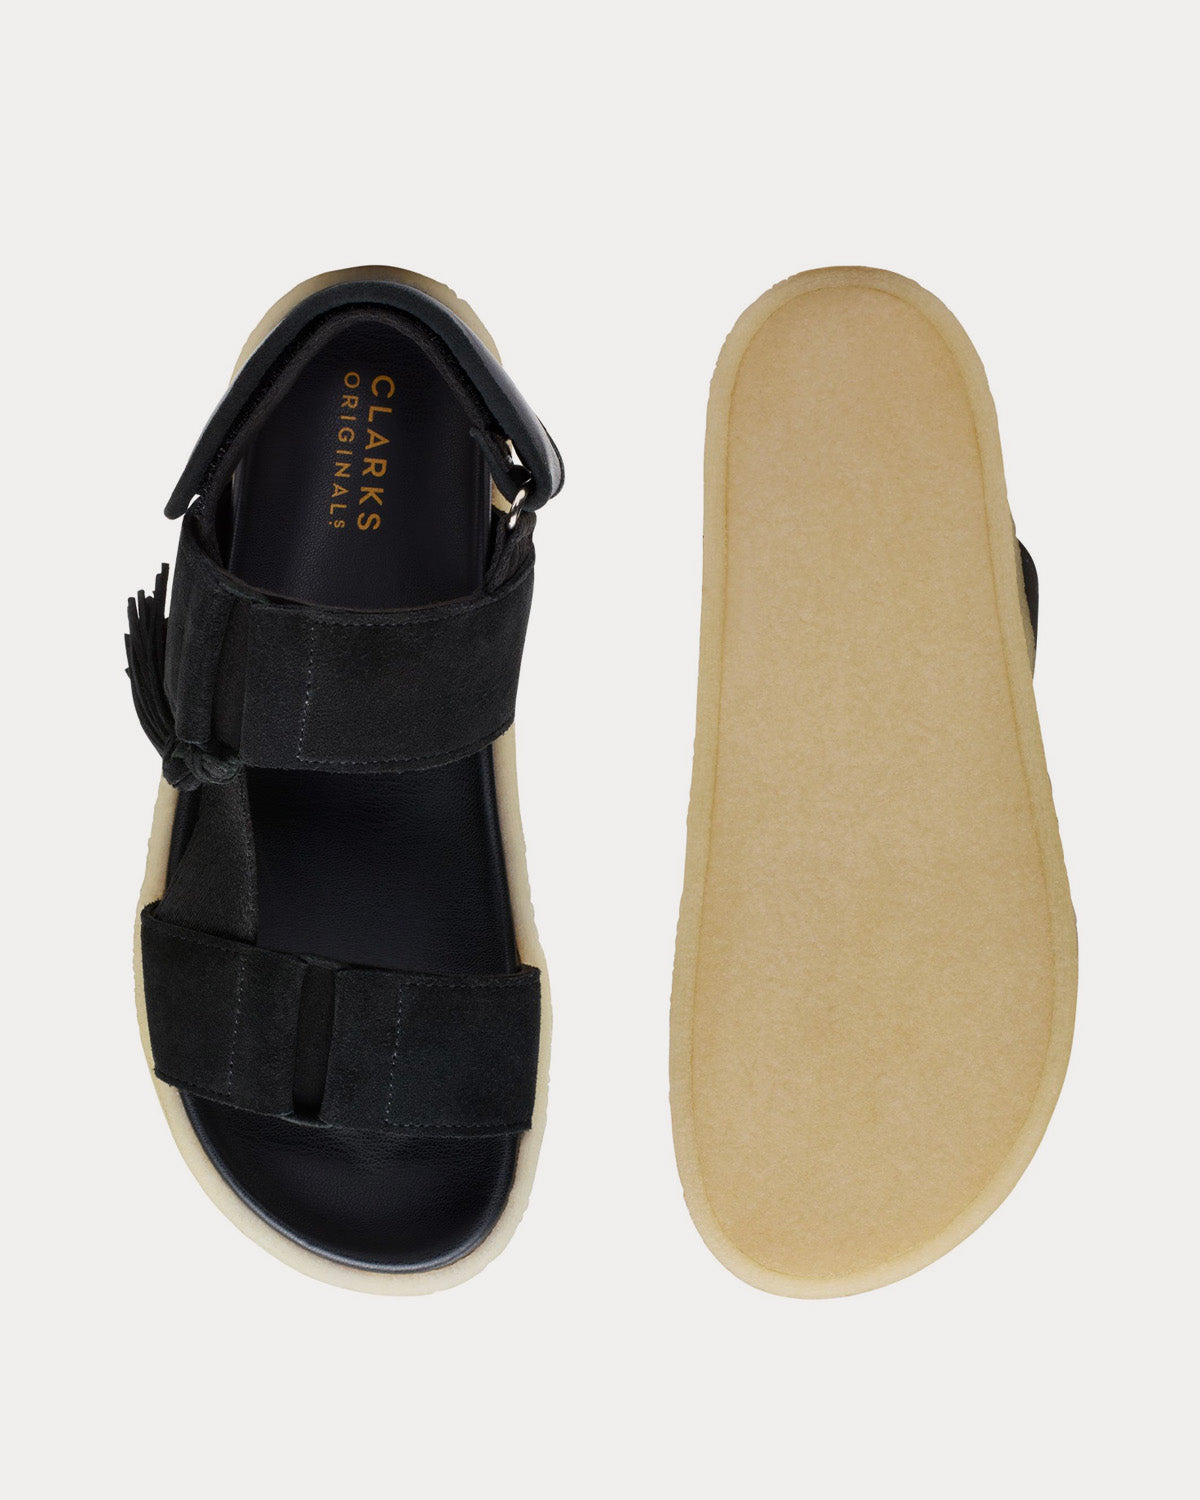 Clarks - Crepe Black Combi Sandals